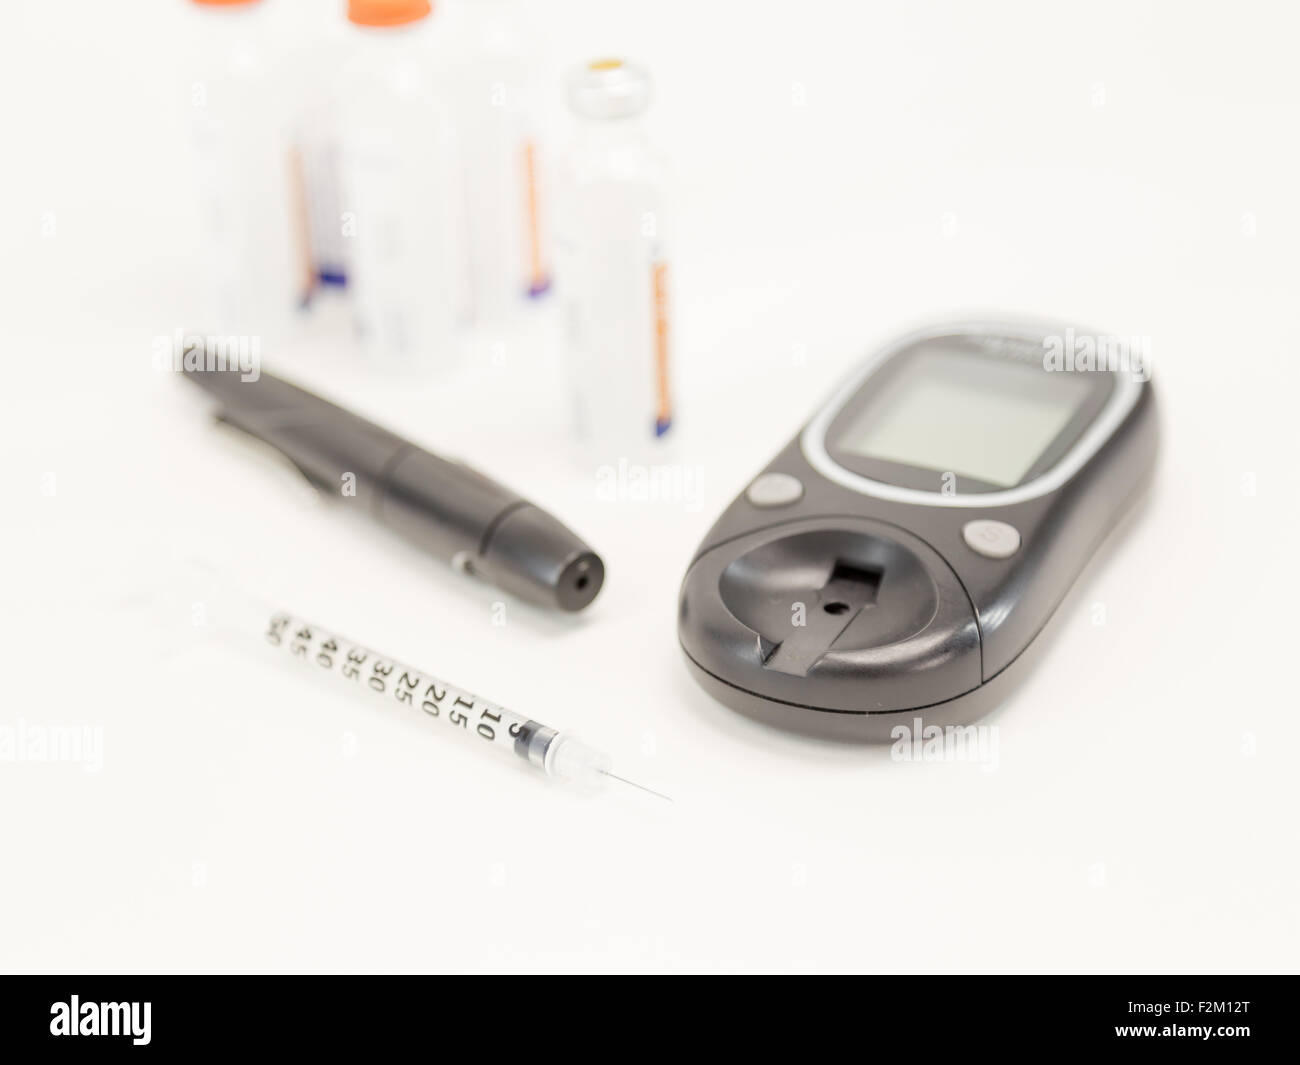 https://c8.alamy.com/comp/F2M12T/blood-sugar-self-testing-equipment-for-diabetes-F2M12T.jpg